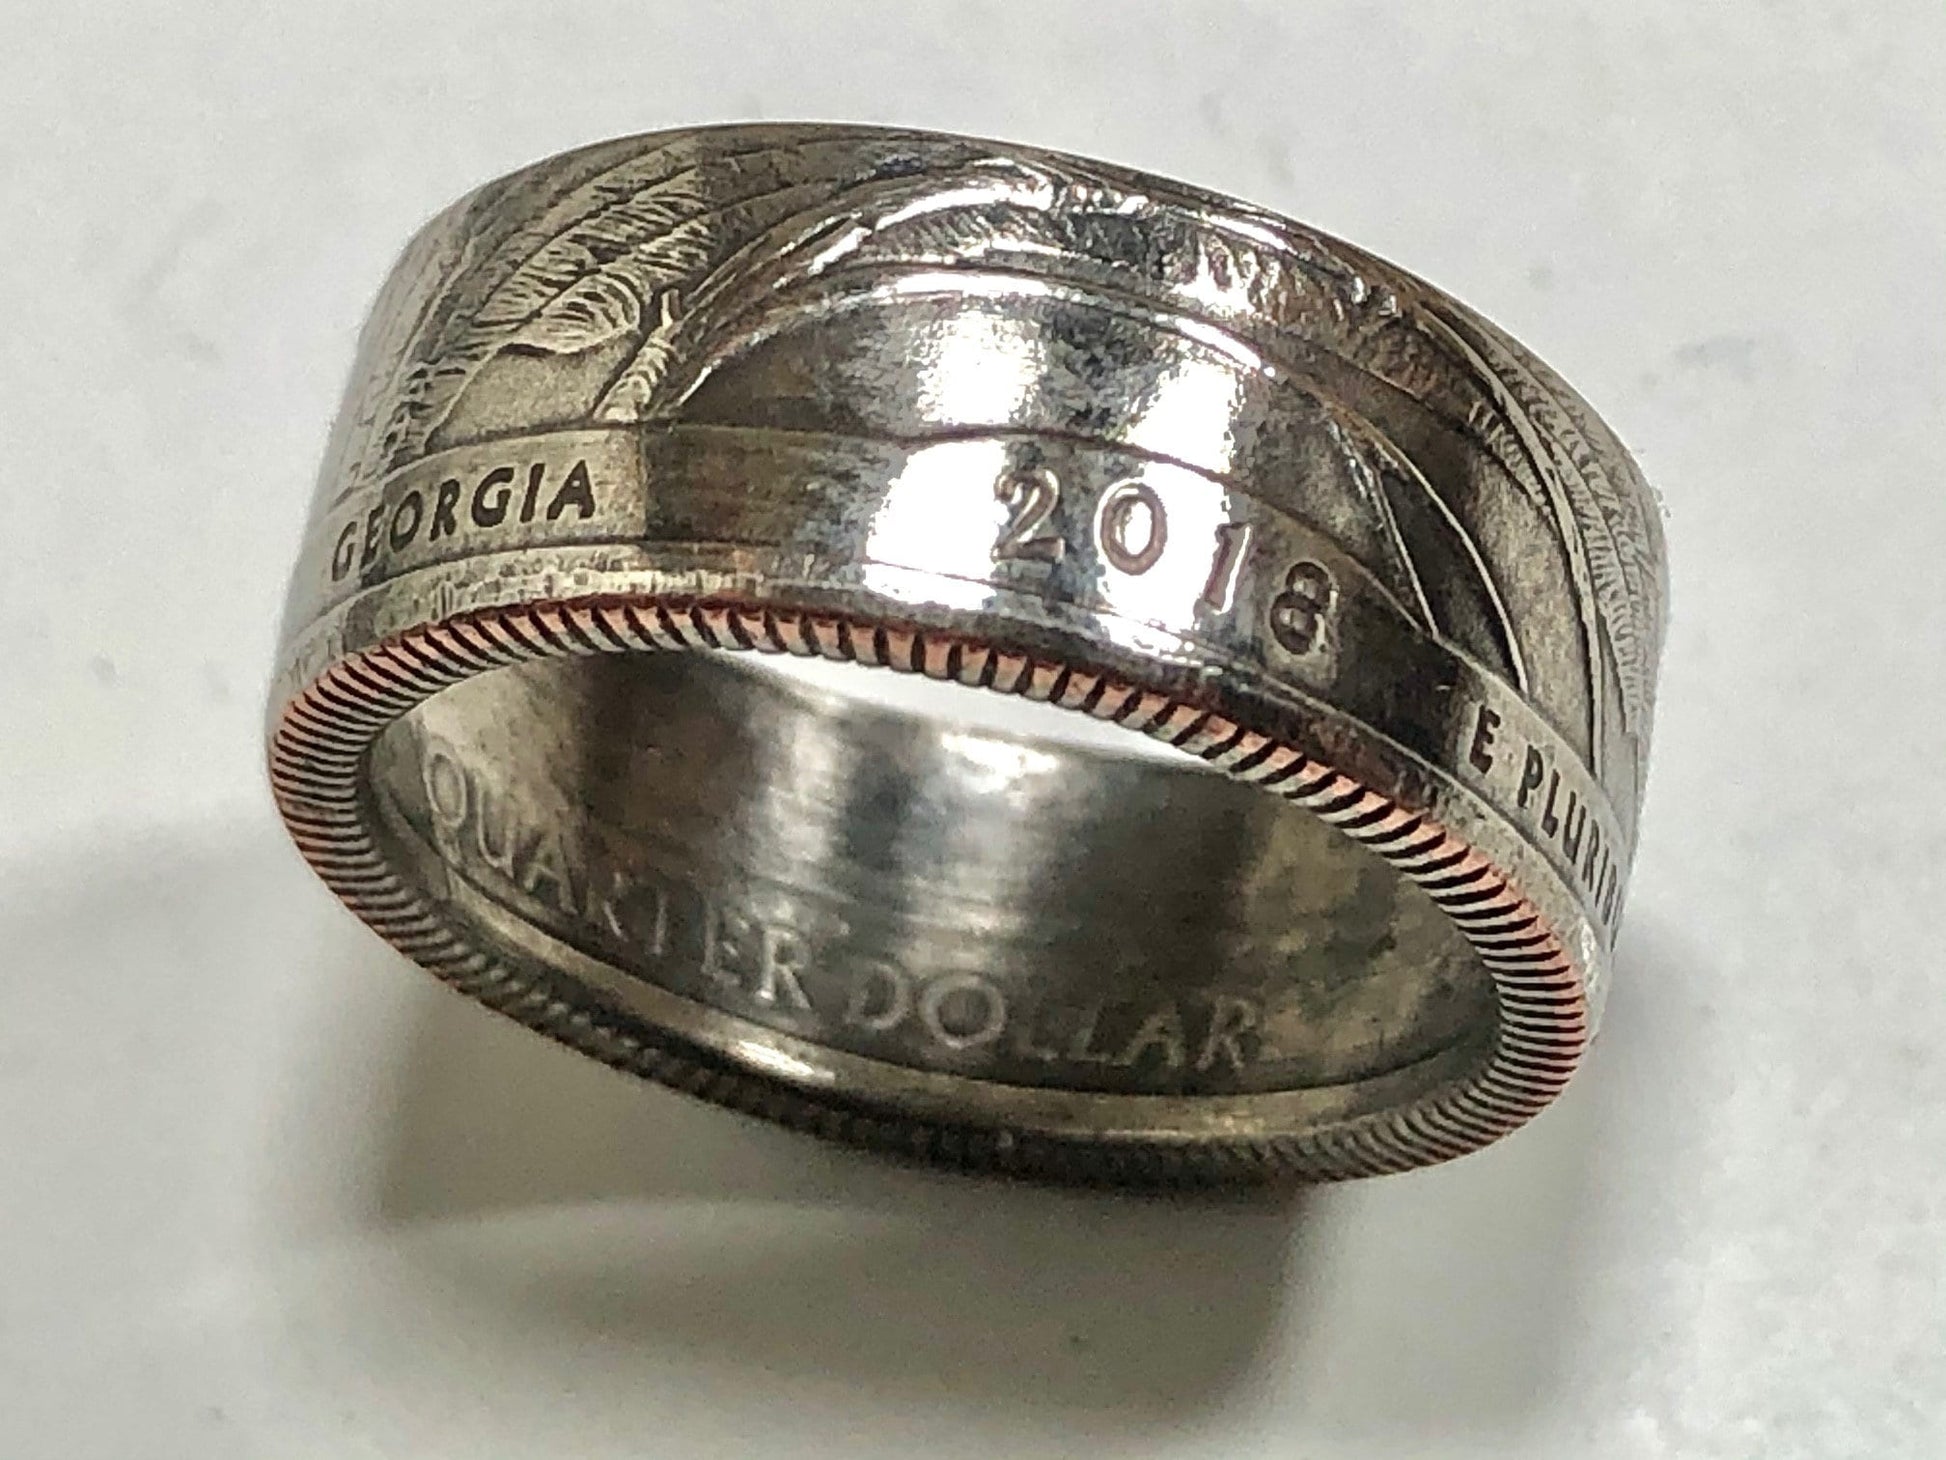 USA Ring Georgia Cumberland Island Quarter Coin Ring